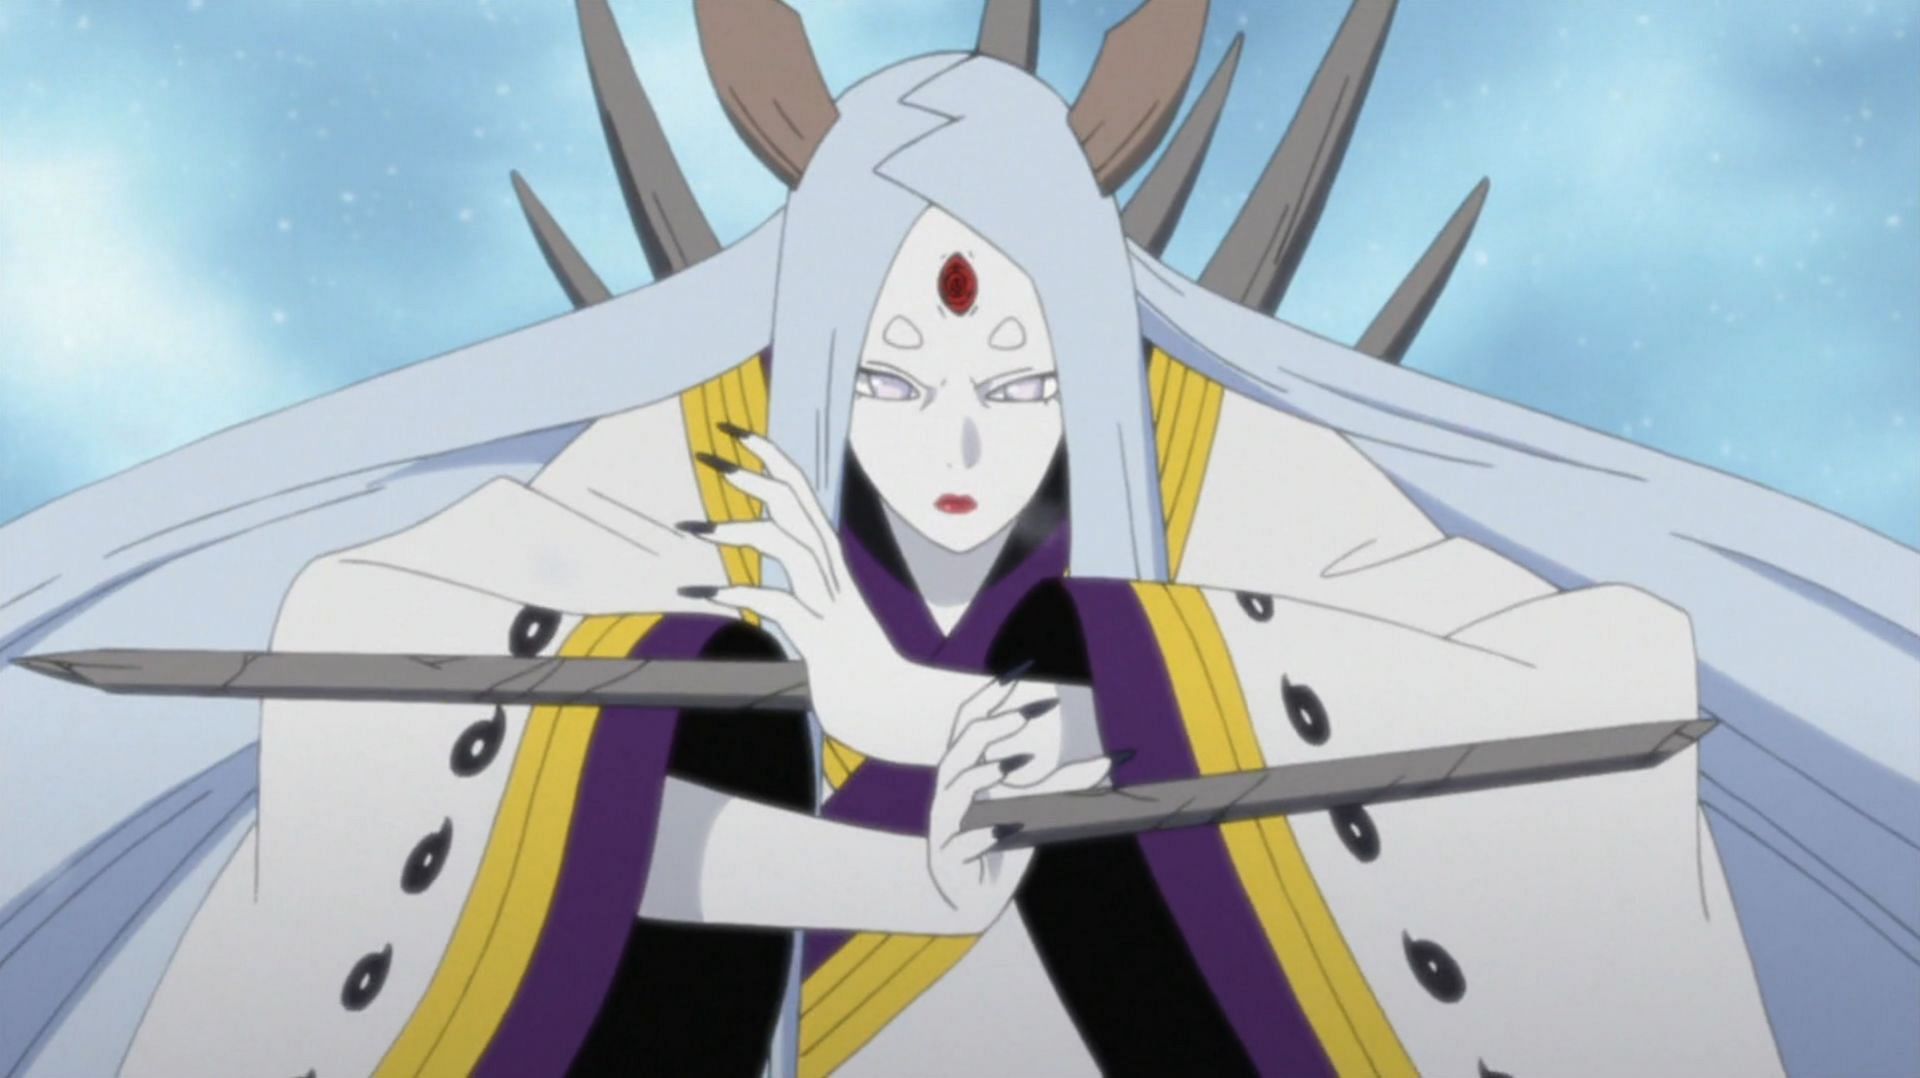 Kaguya Otsutsuki as seen in Naruto (Image via Studio Pierrot)